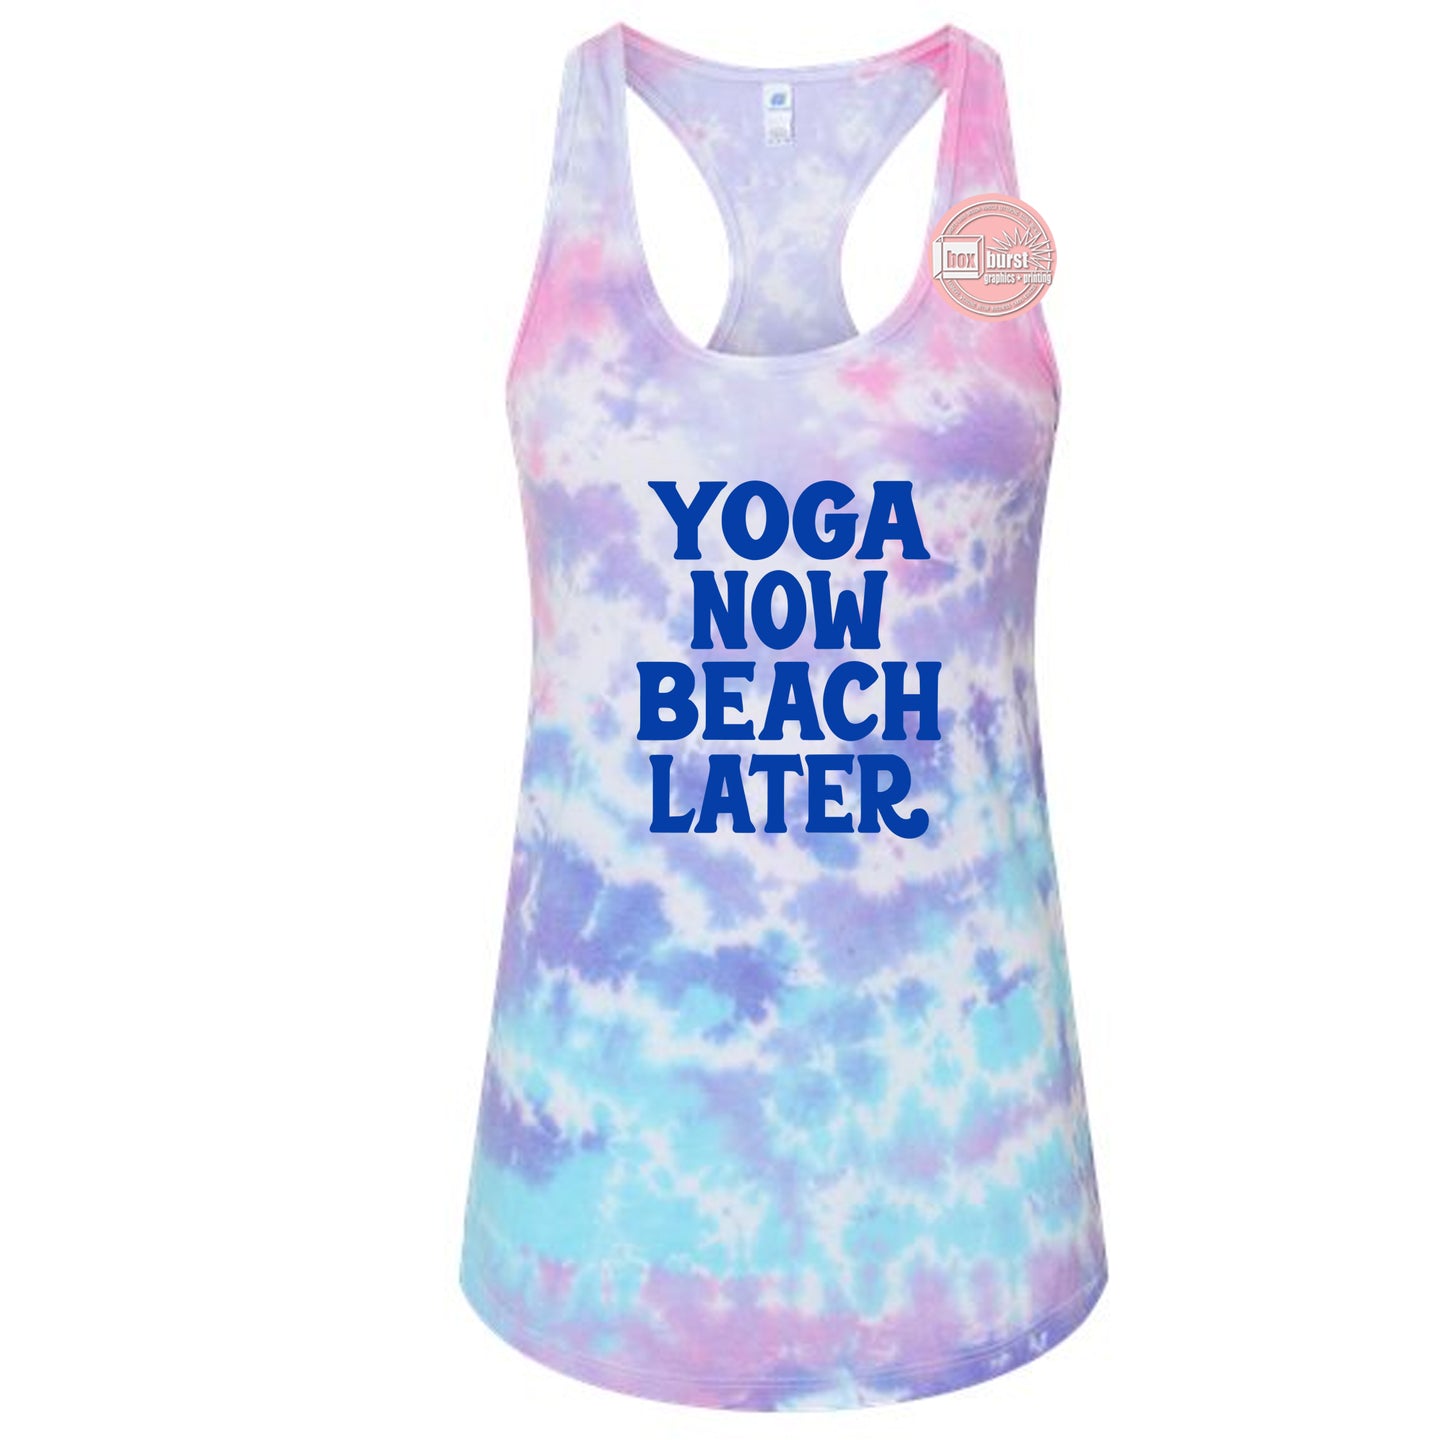 Yoga Now Beach Later tie dye tank top women's racerback tank